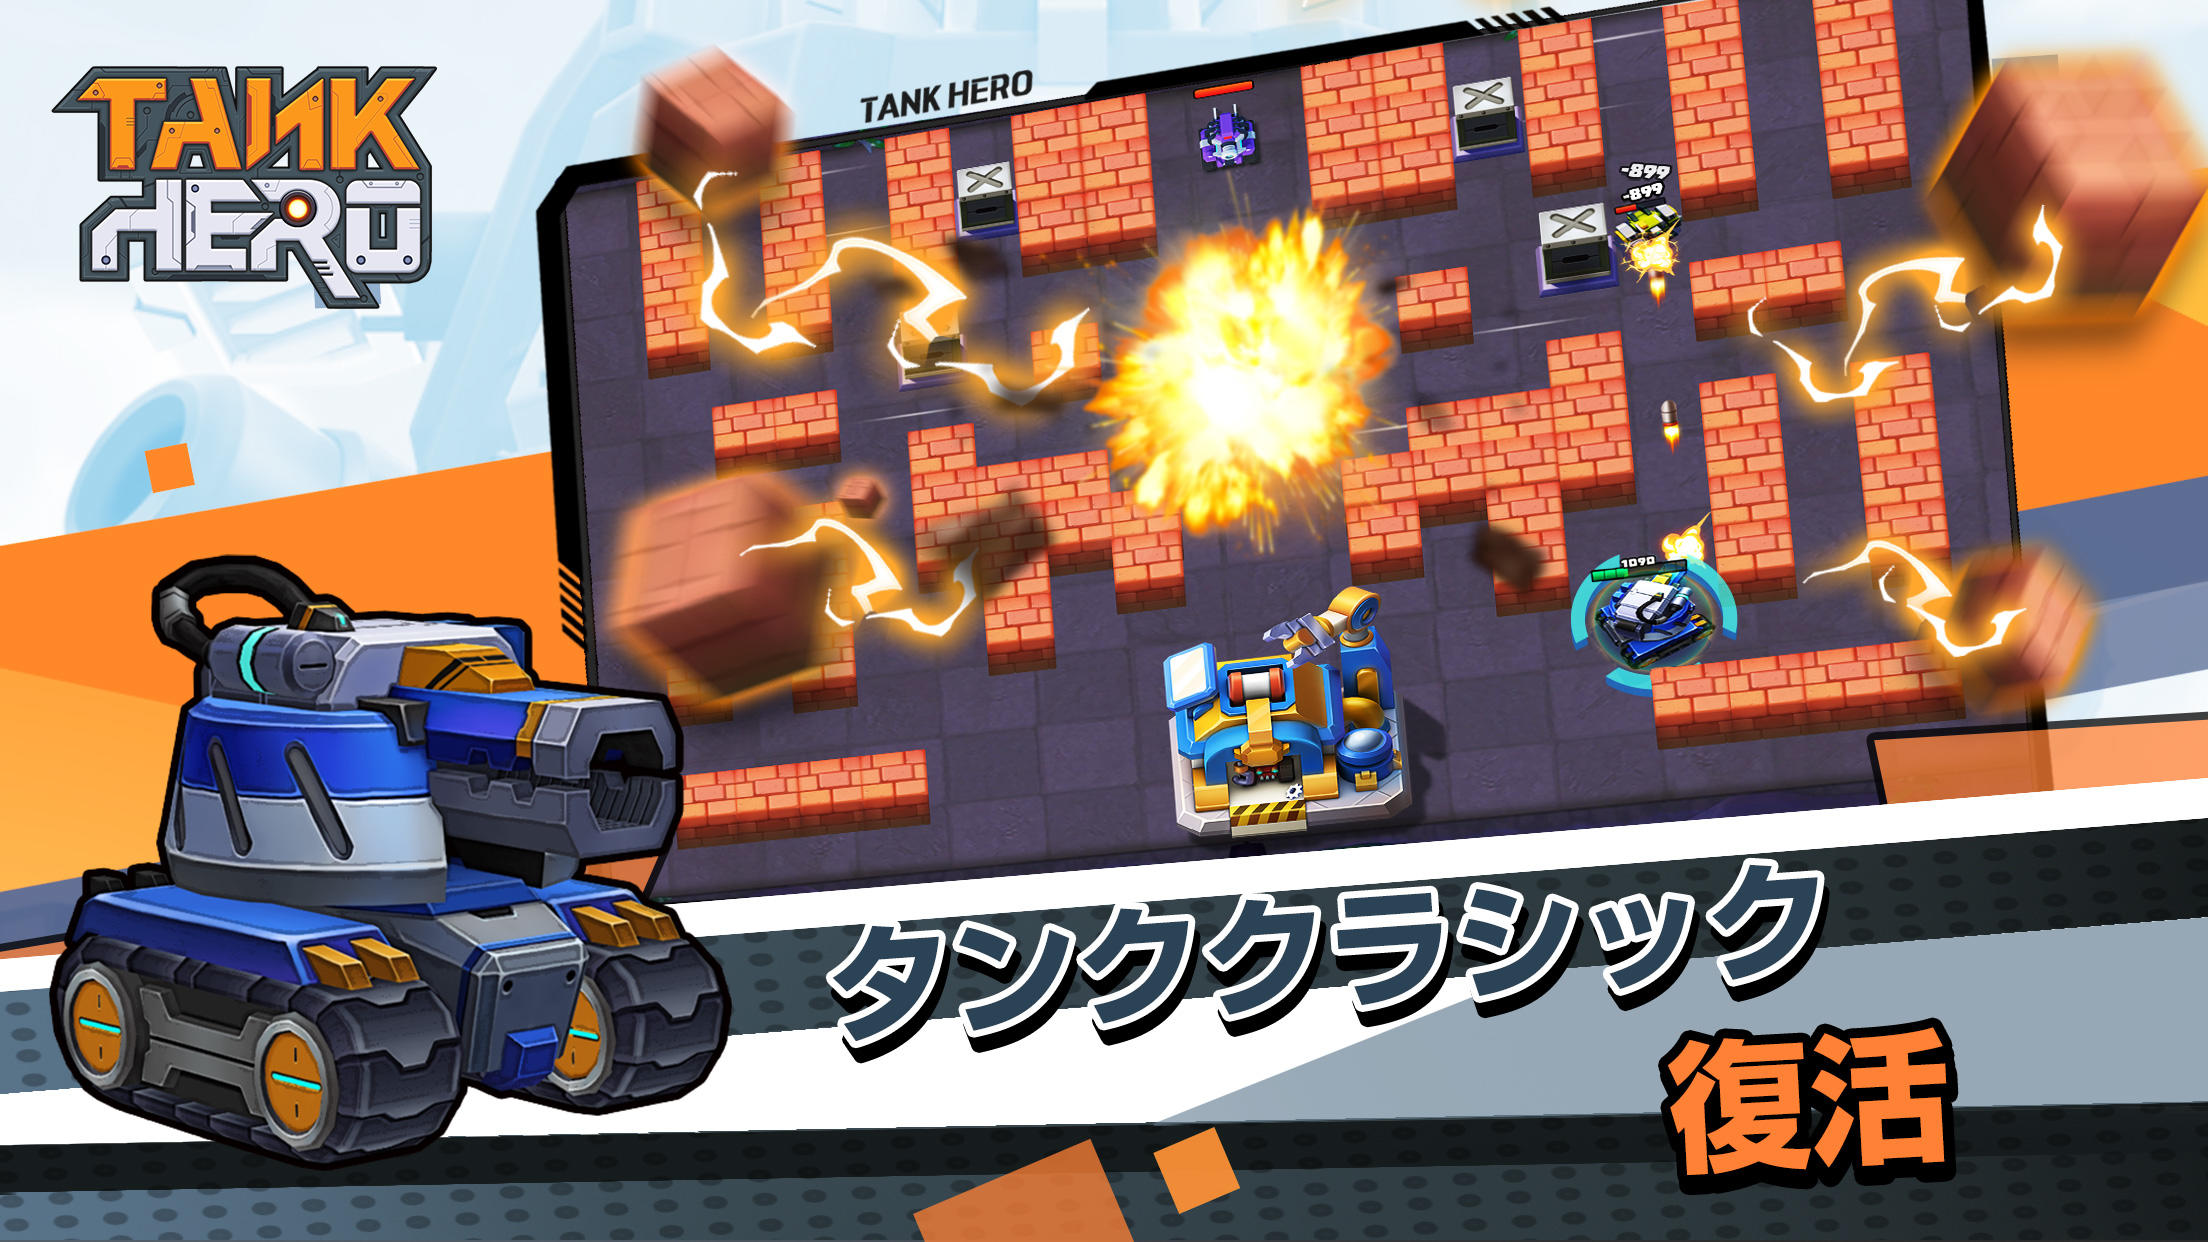 Screenshot 1 of タンク ヒーロー - 戦車 シューティング ゲーム 2.0.8